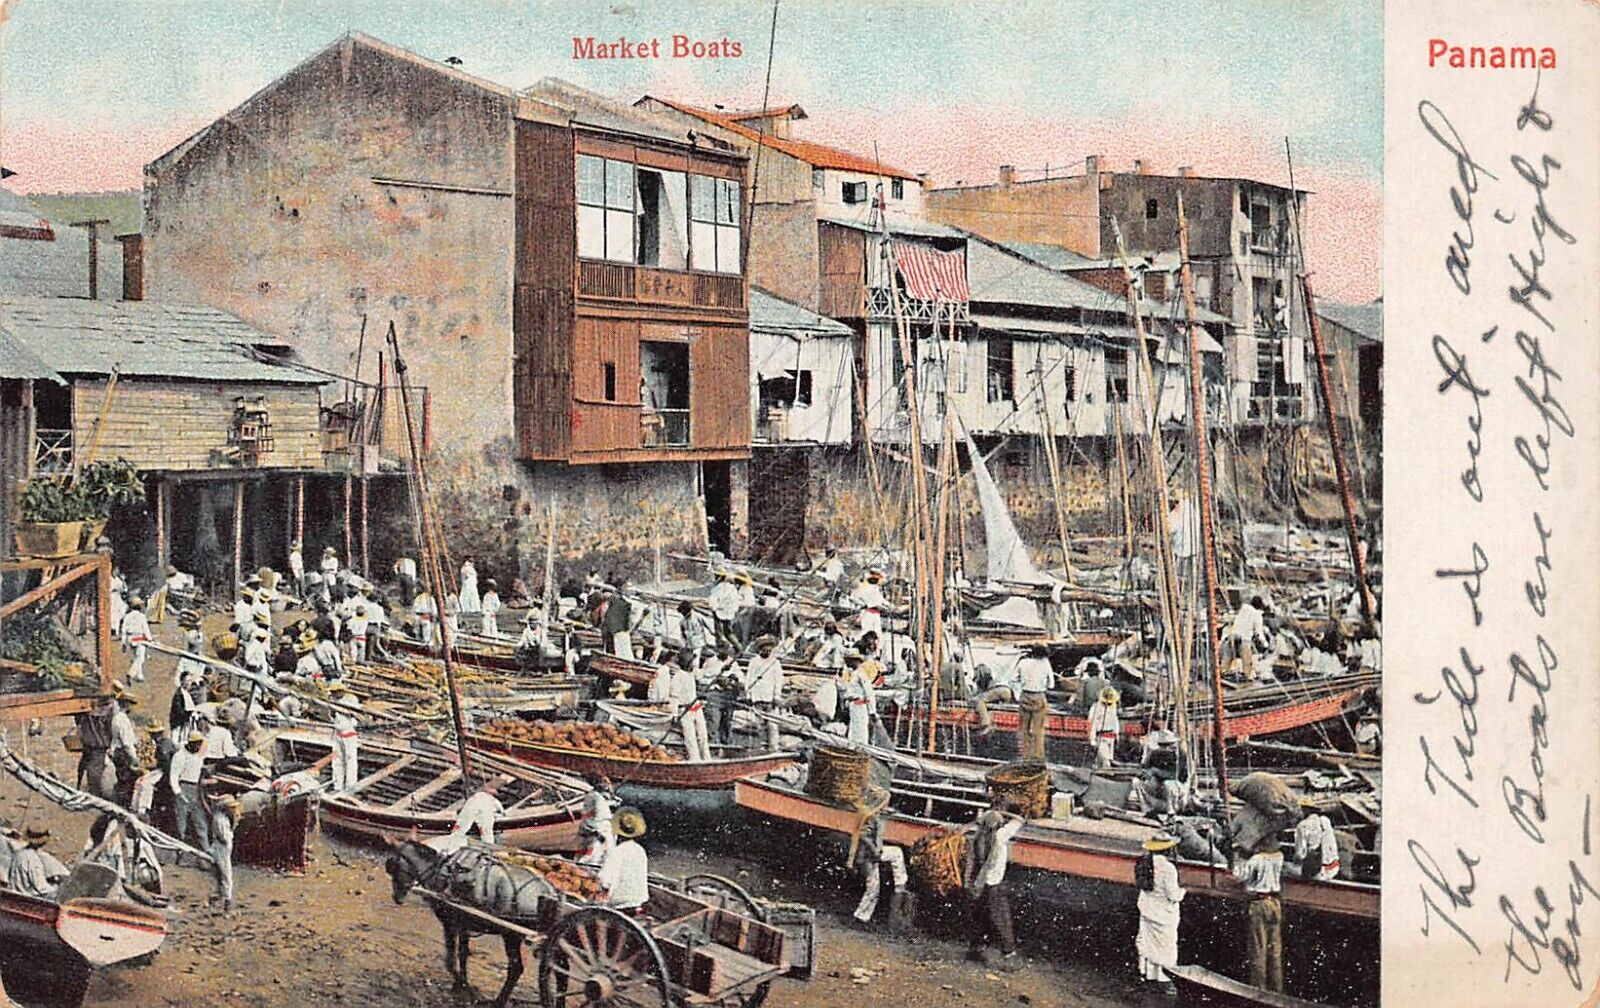 Panama City Bay Golf Harbor Fish Market Boat Coconut Early 1900s Vtg Postcard A8